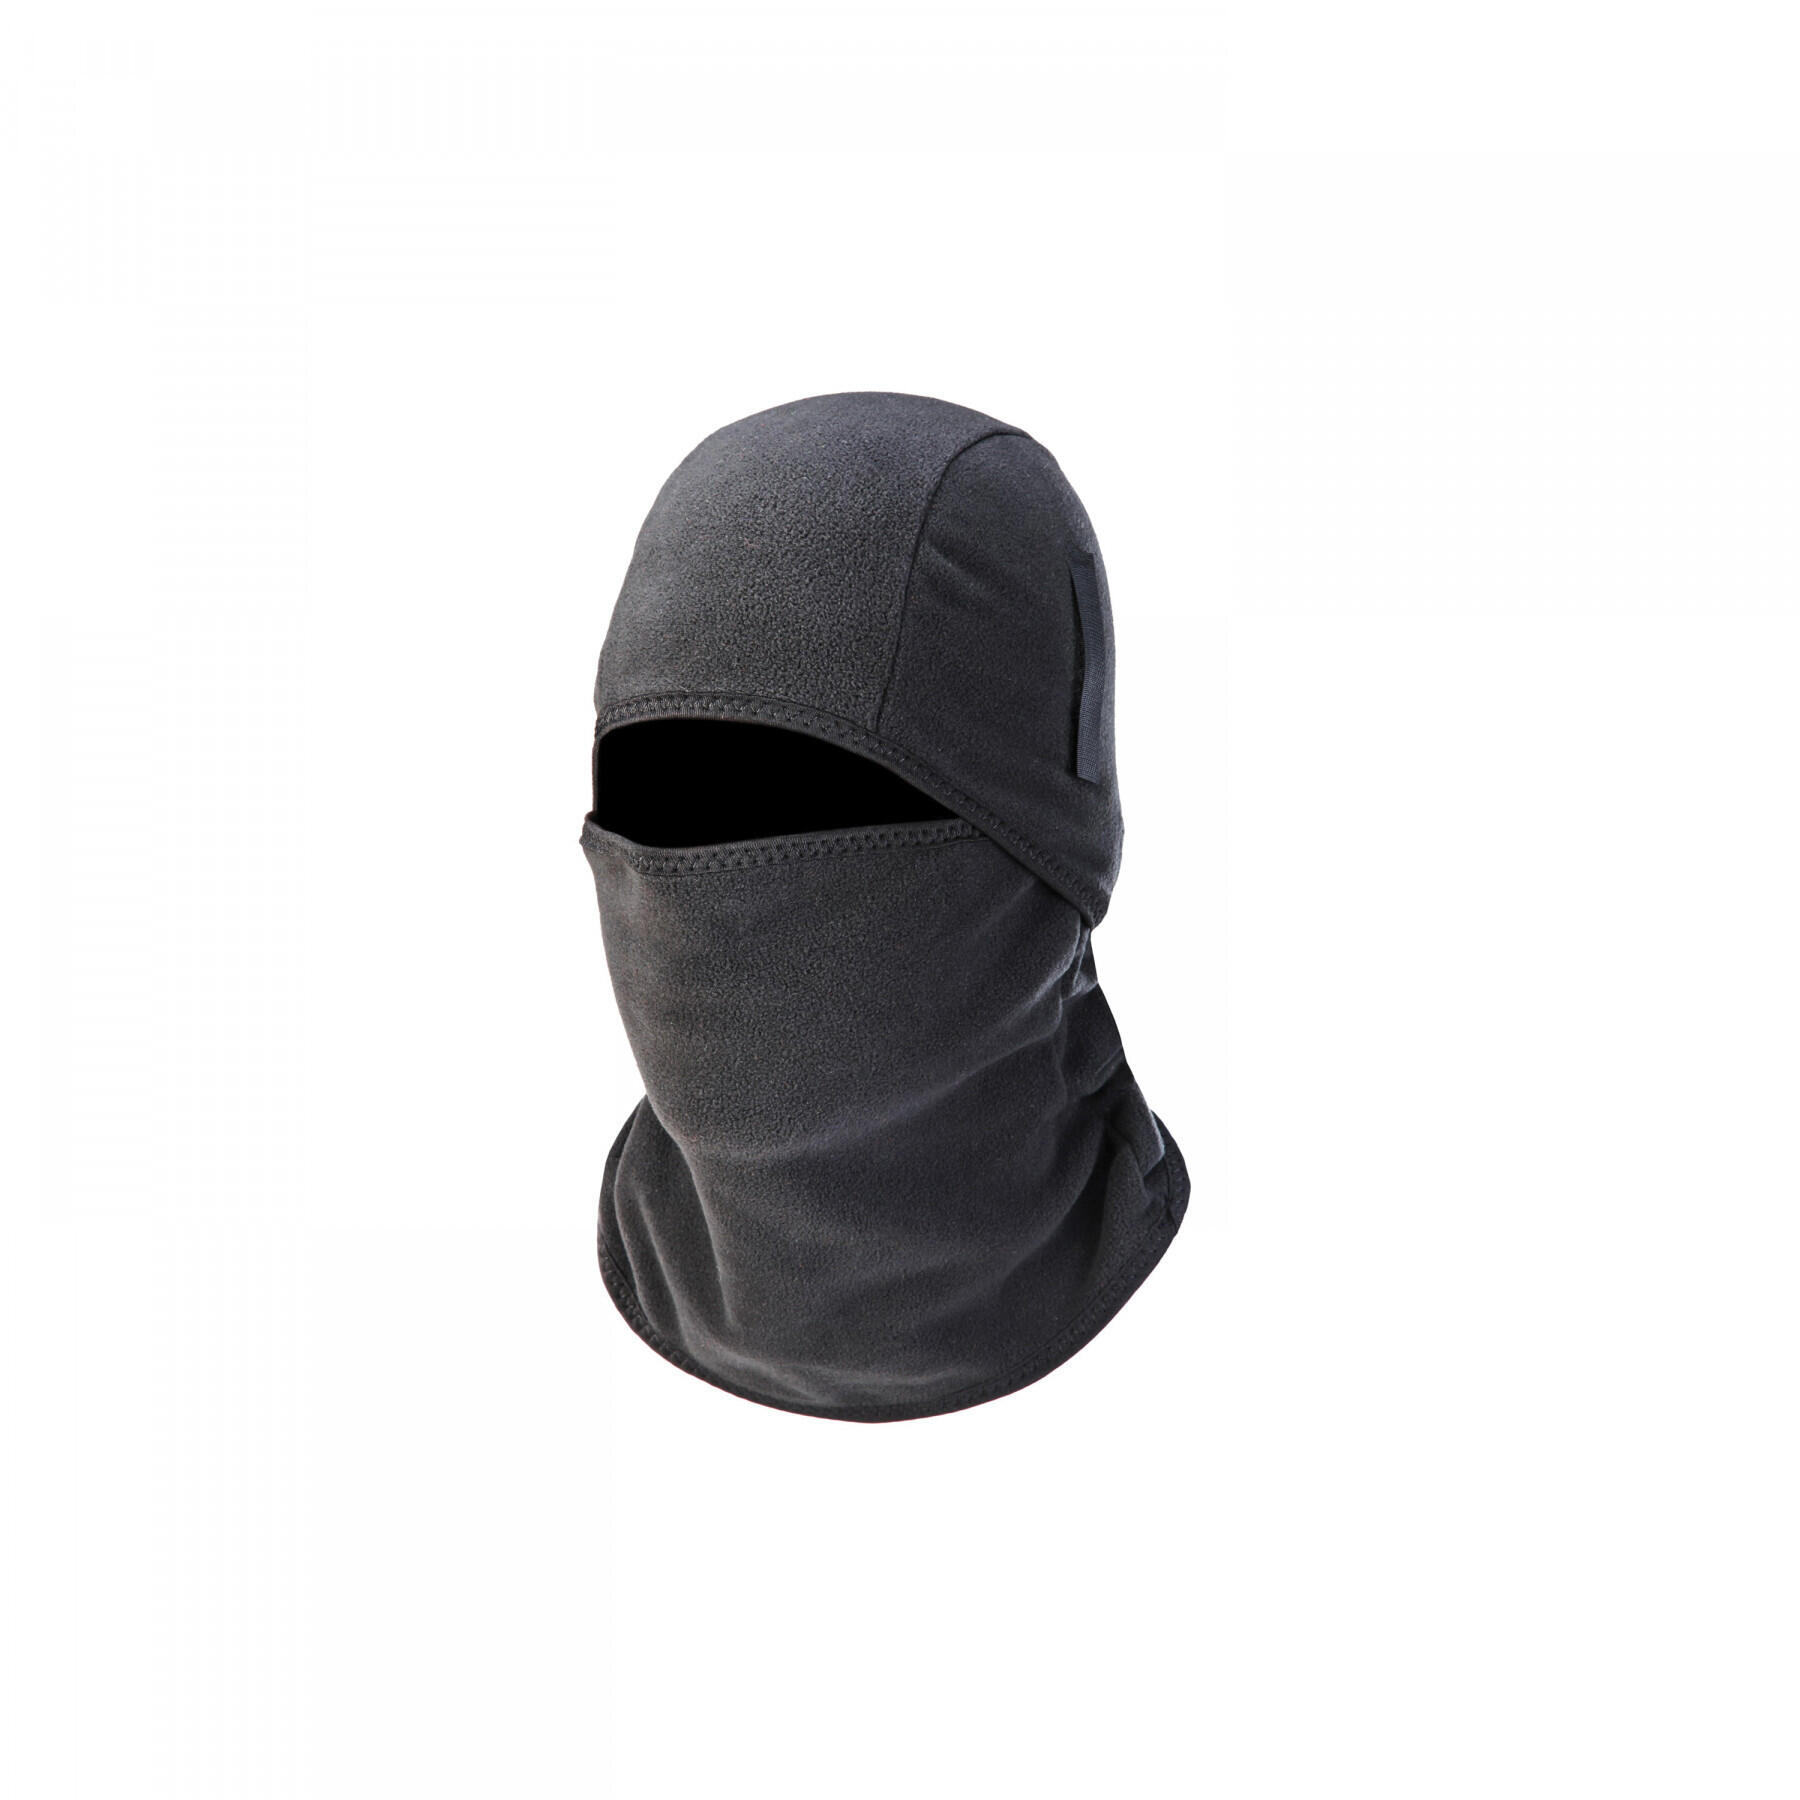 N-Ferno® 6826 2-Piece Balaclava Face Mask, Fleece